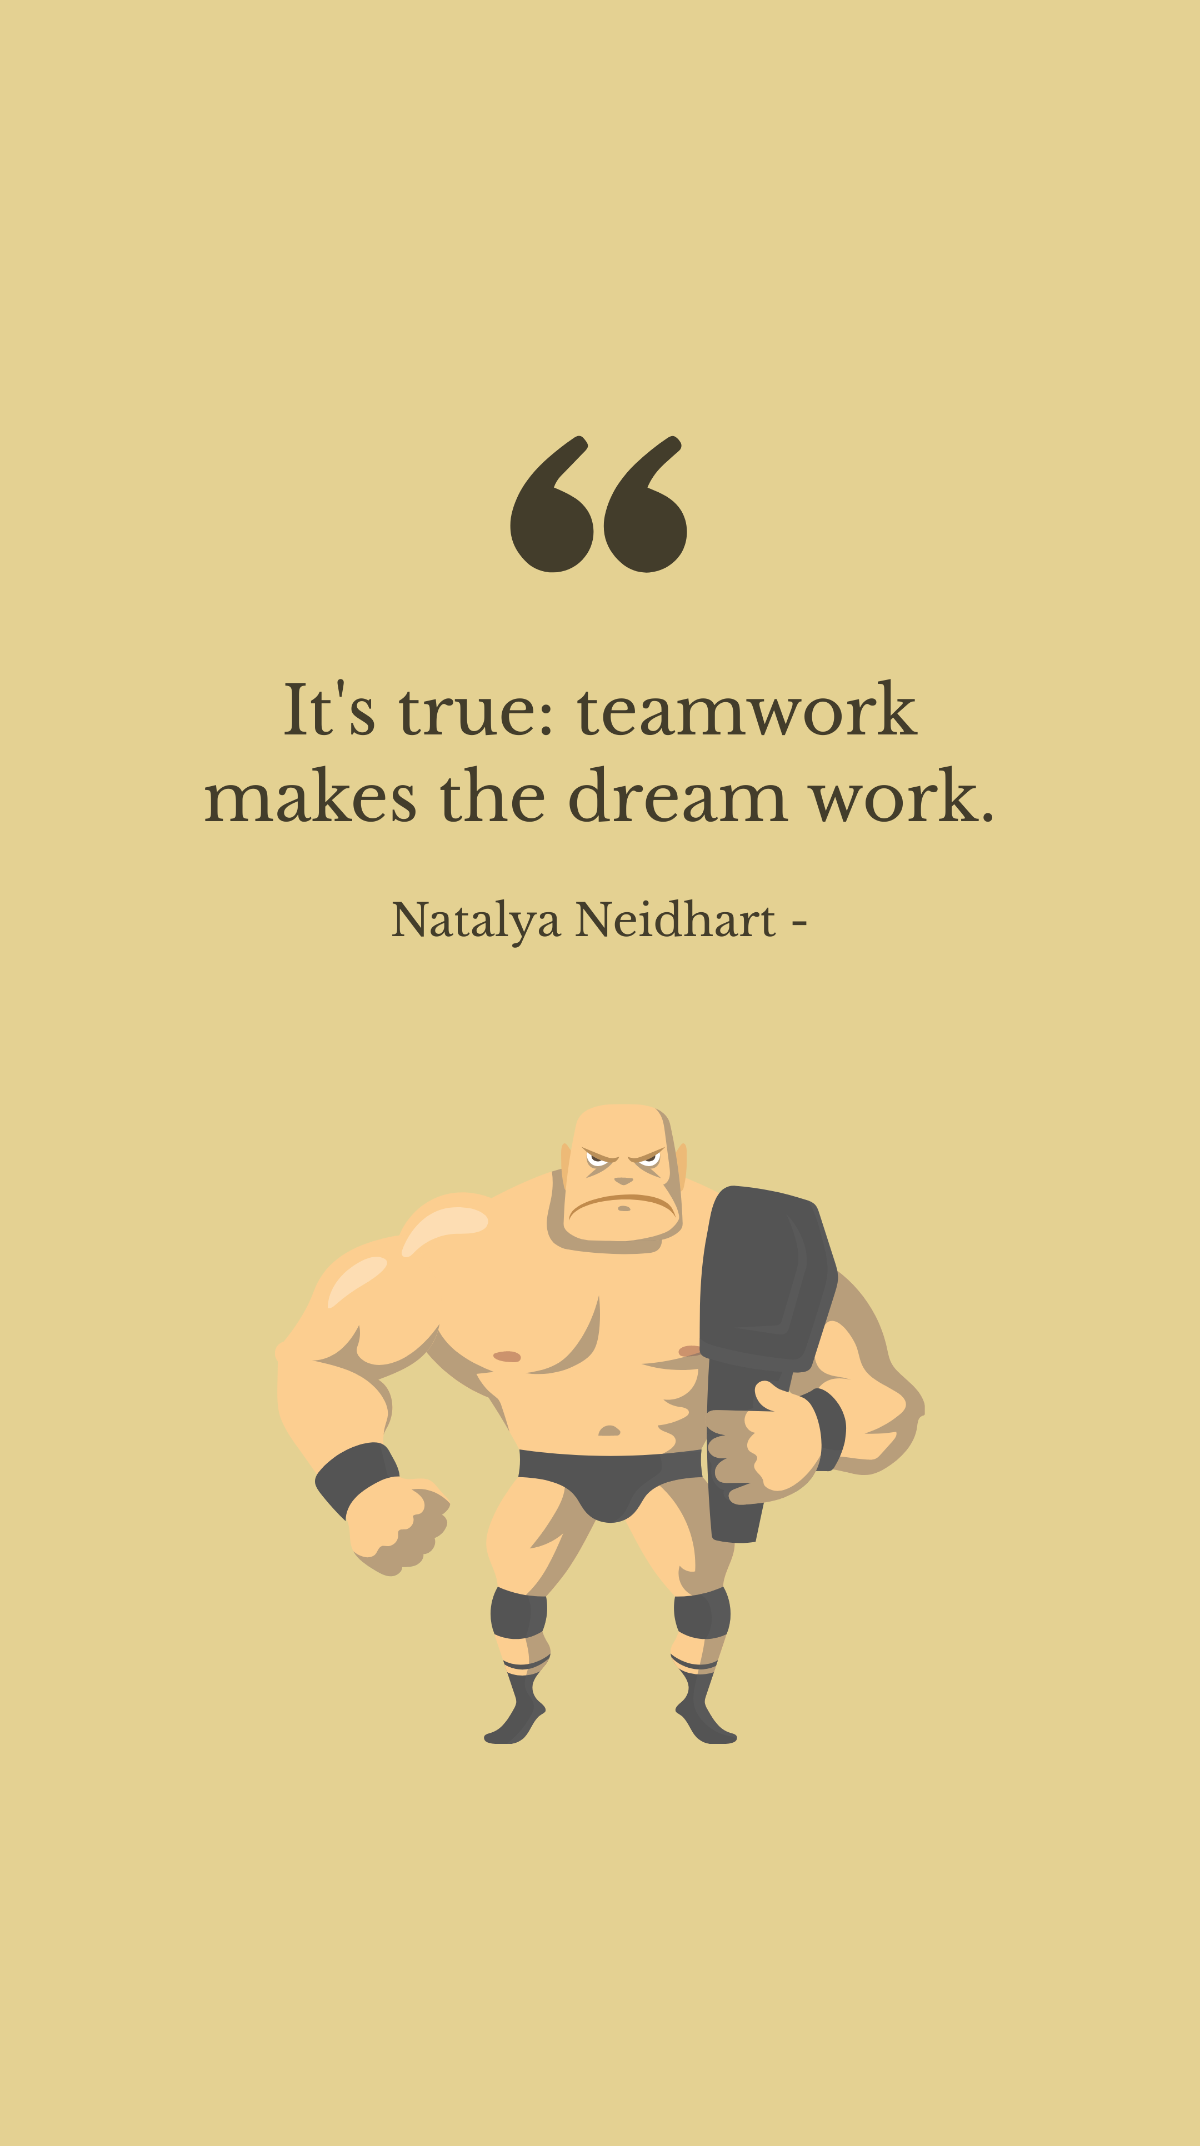 Natalya Neidhart - It's true: teamwork makes the dream work.